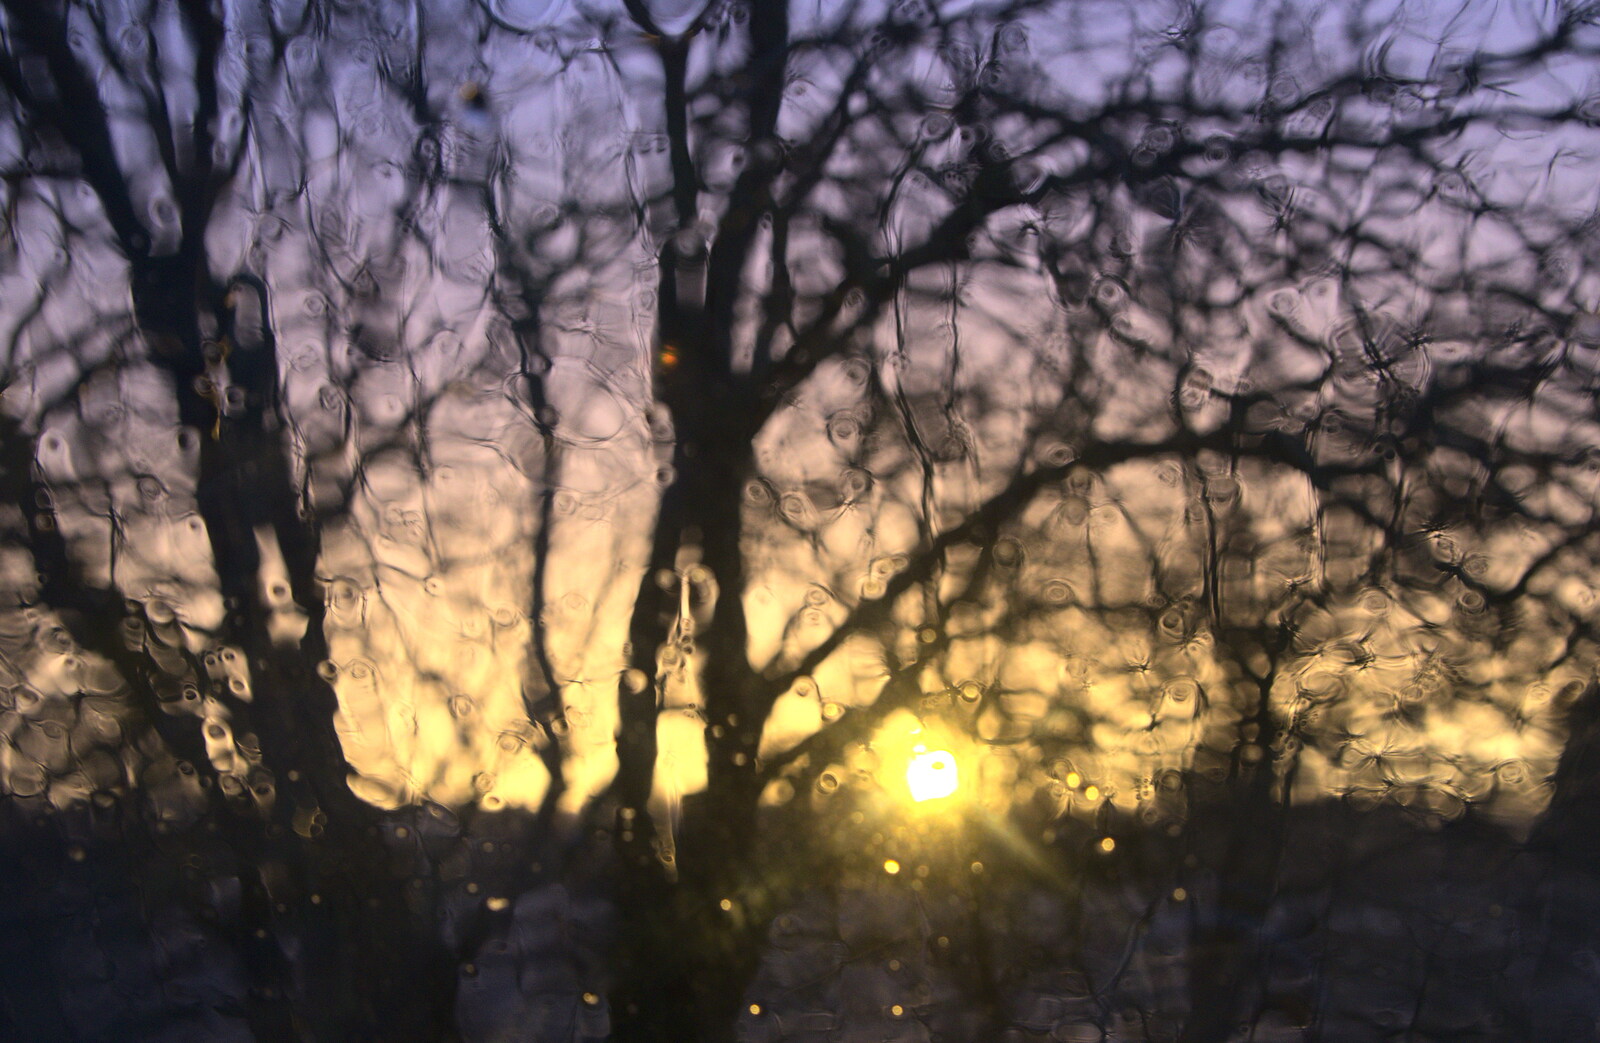 Sun and trees through a rainy window from The BBs do a Recording, Hethel, Norfolk - 18th January 2015